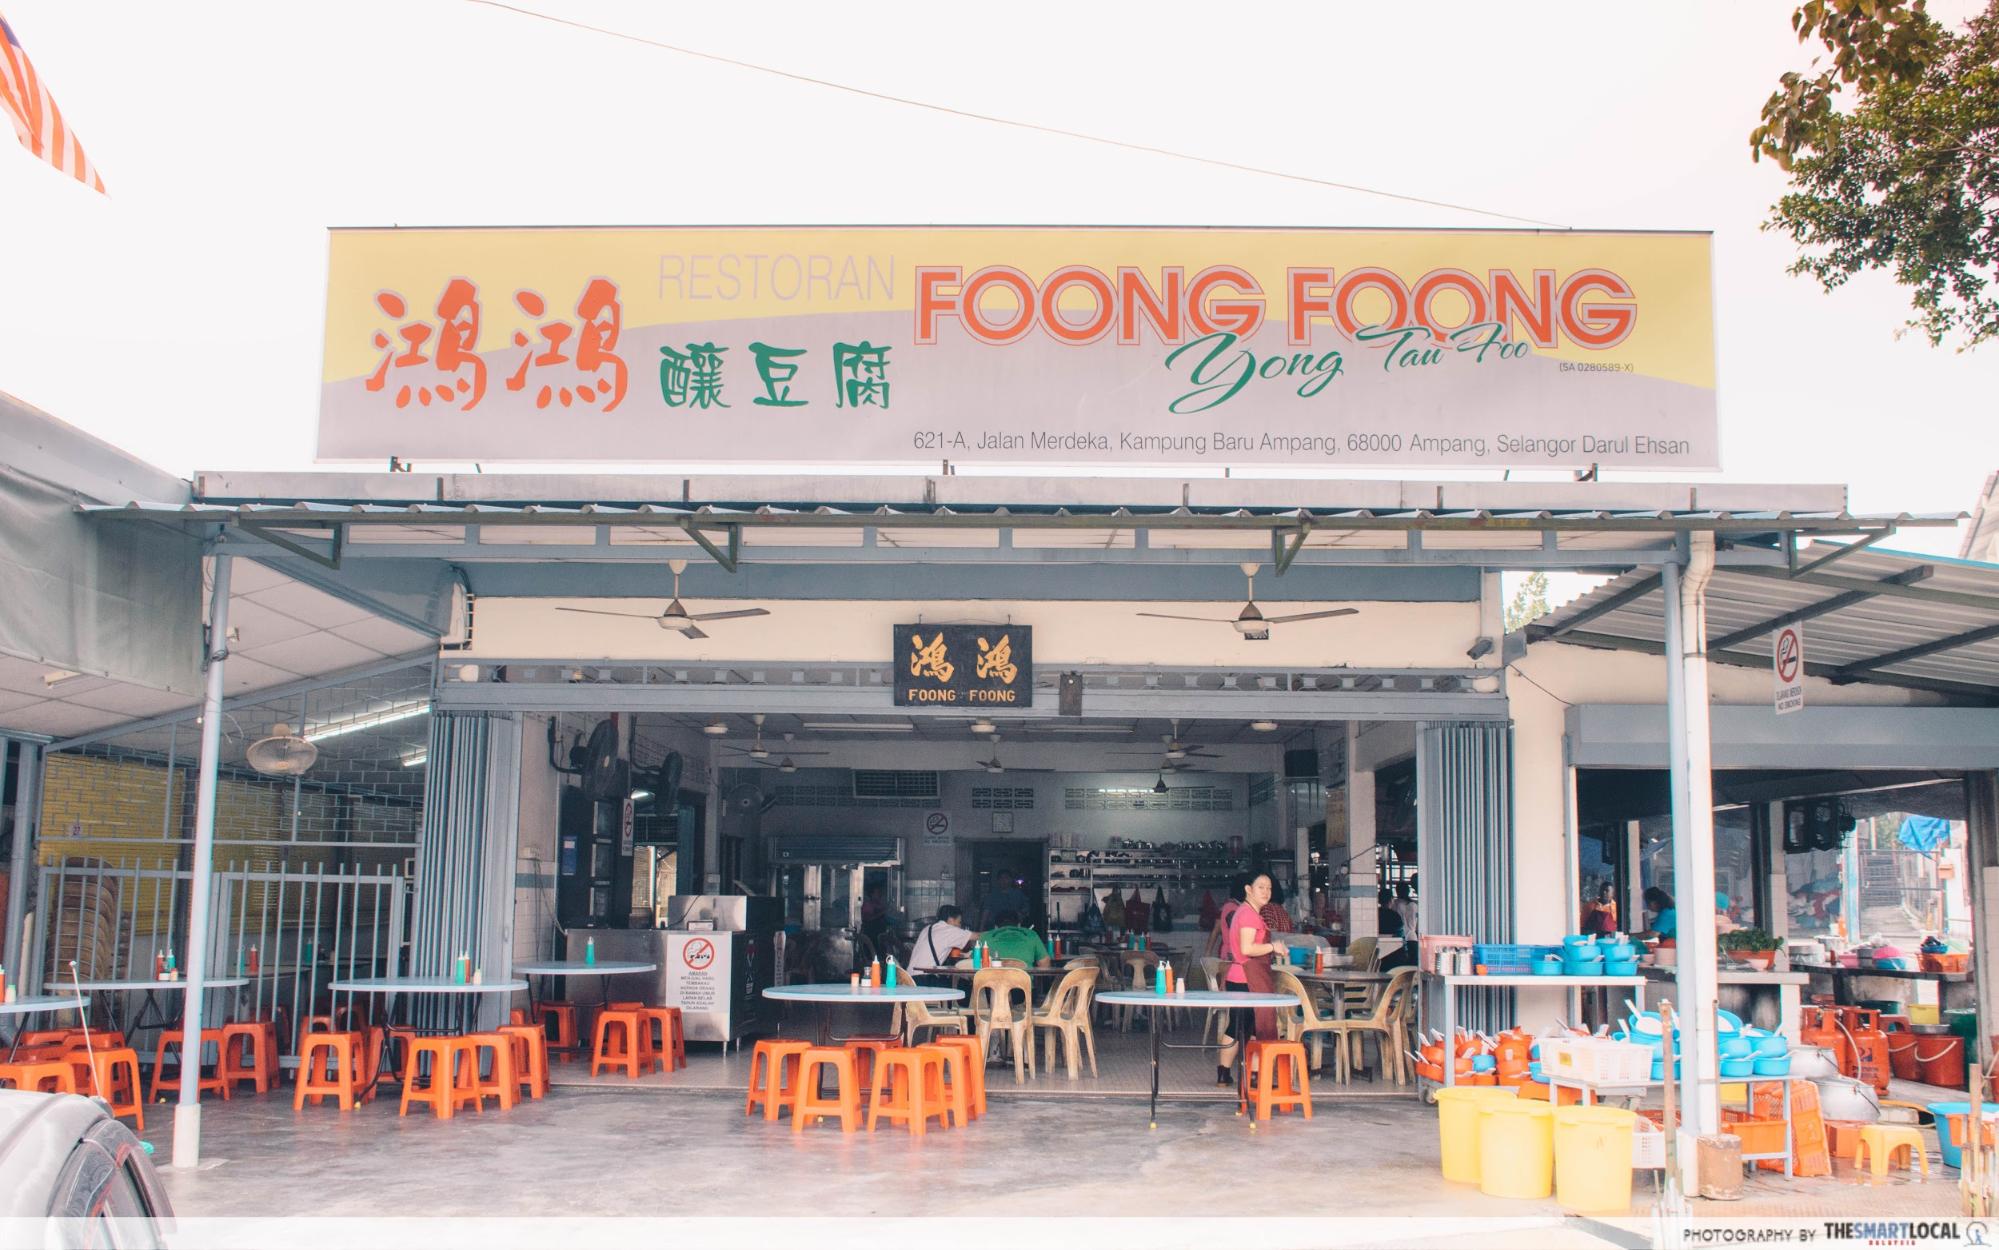 Foong Foong storefront